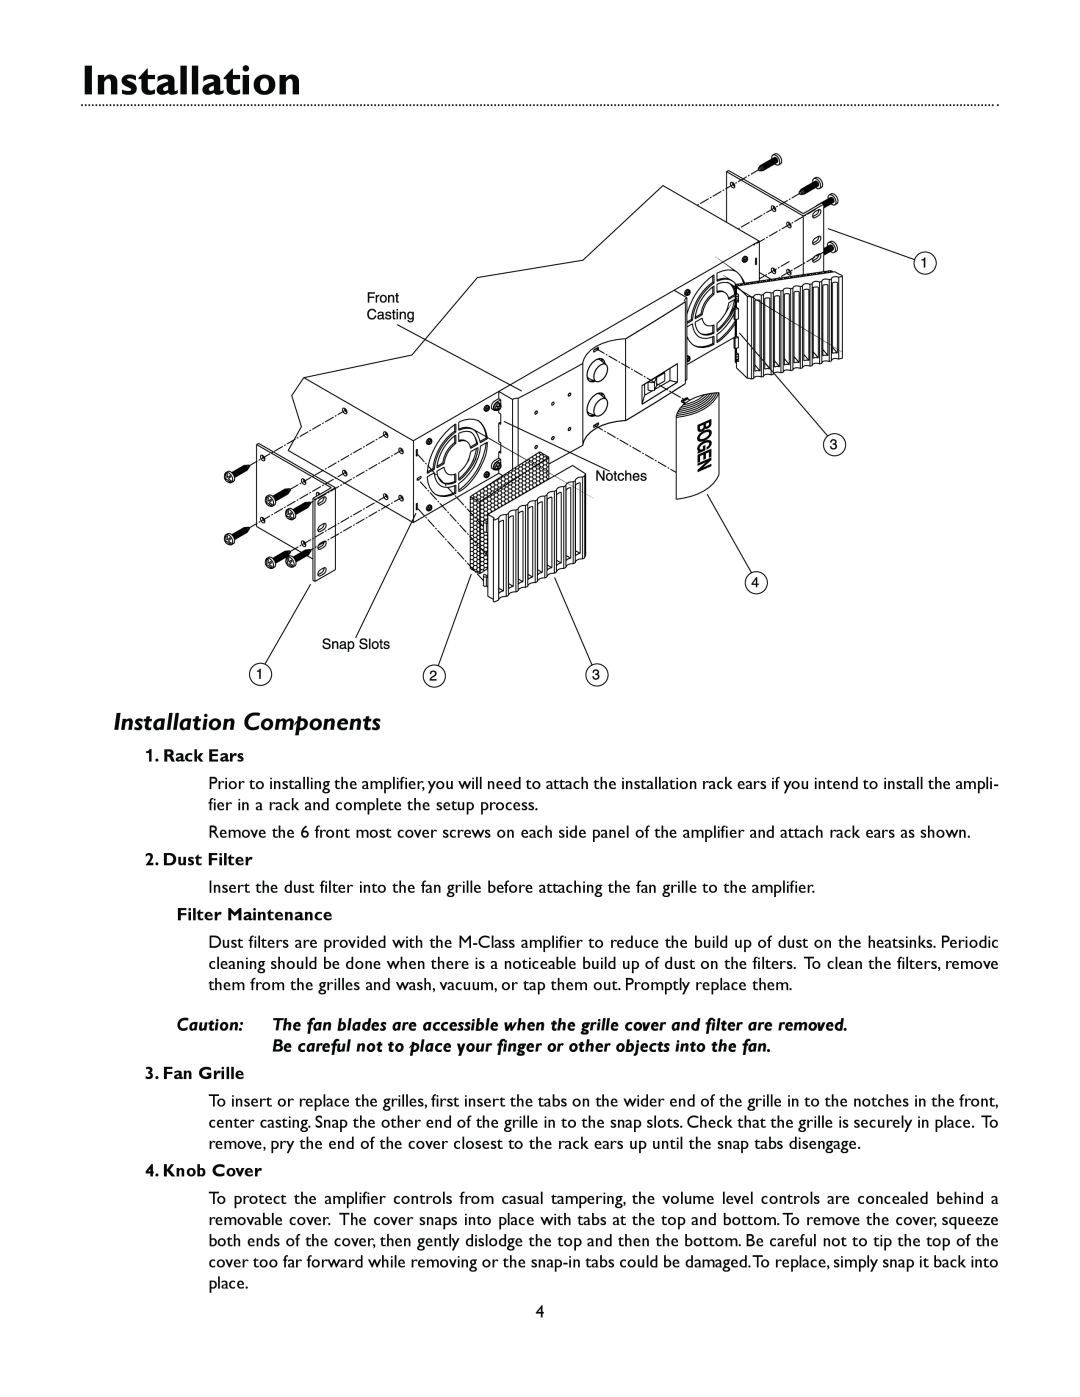 Bogen M300 manual Installation Components, Rack Ears, Dust Filter, Filter Maintenance, Fan Grille, Knob Cover 